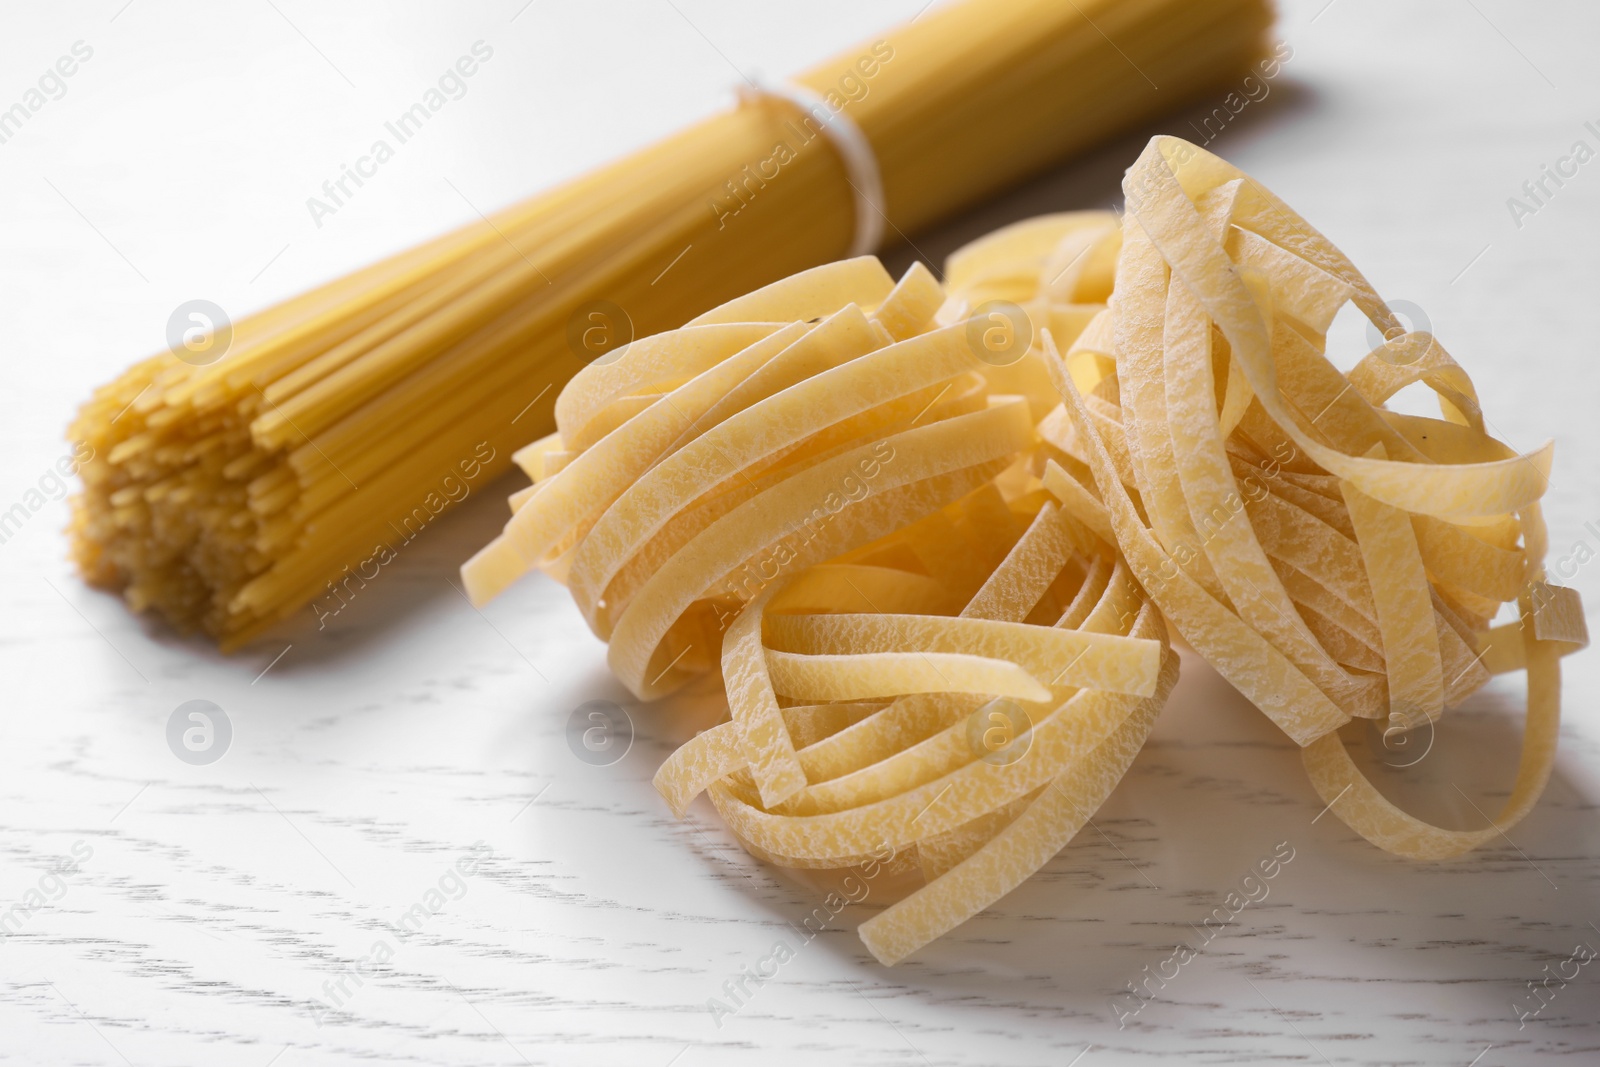 Photo of Tagliatelle pasta and spaghetti on white wooden table, closeup